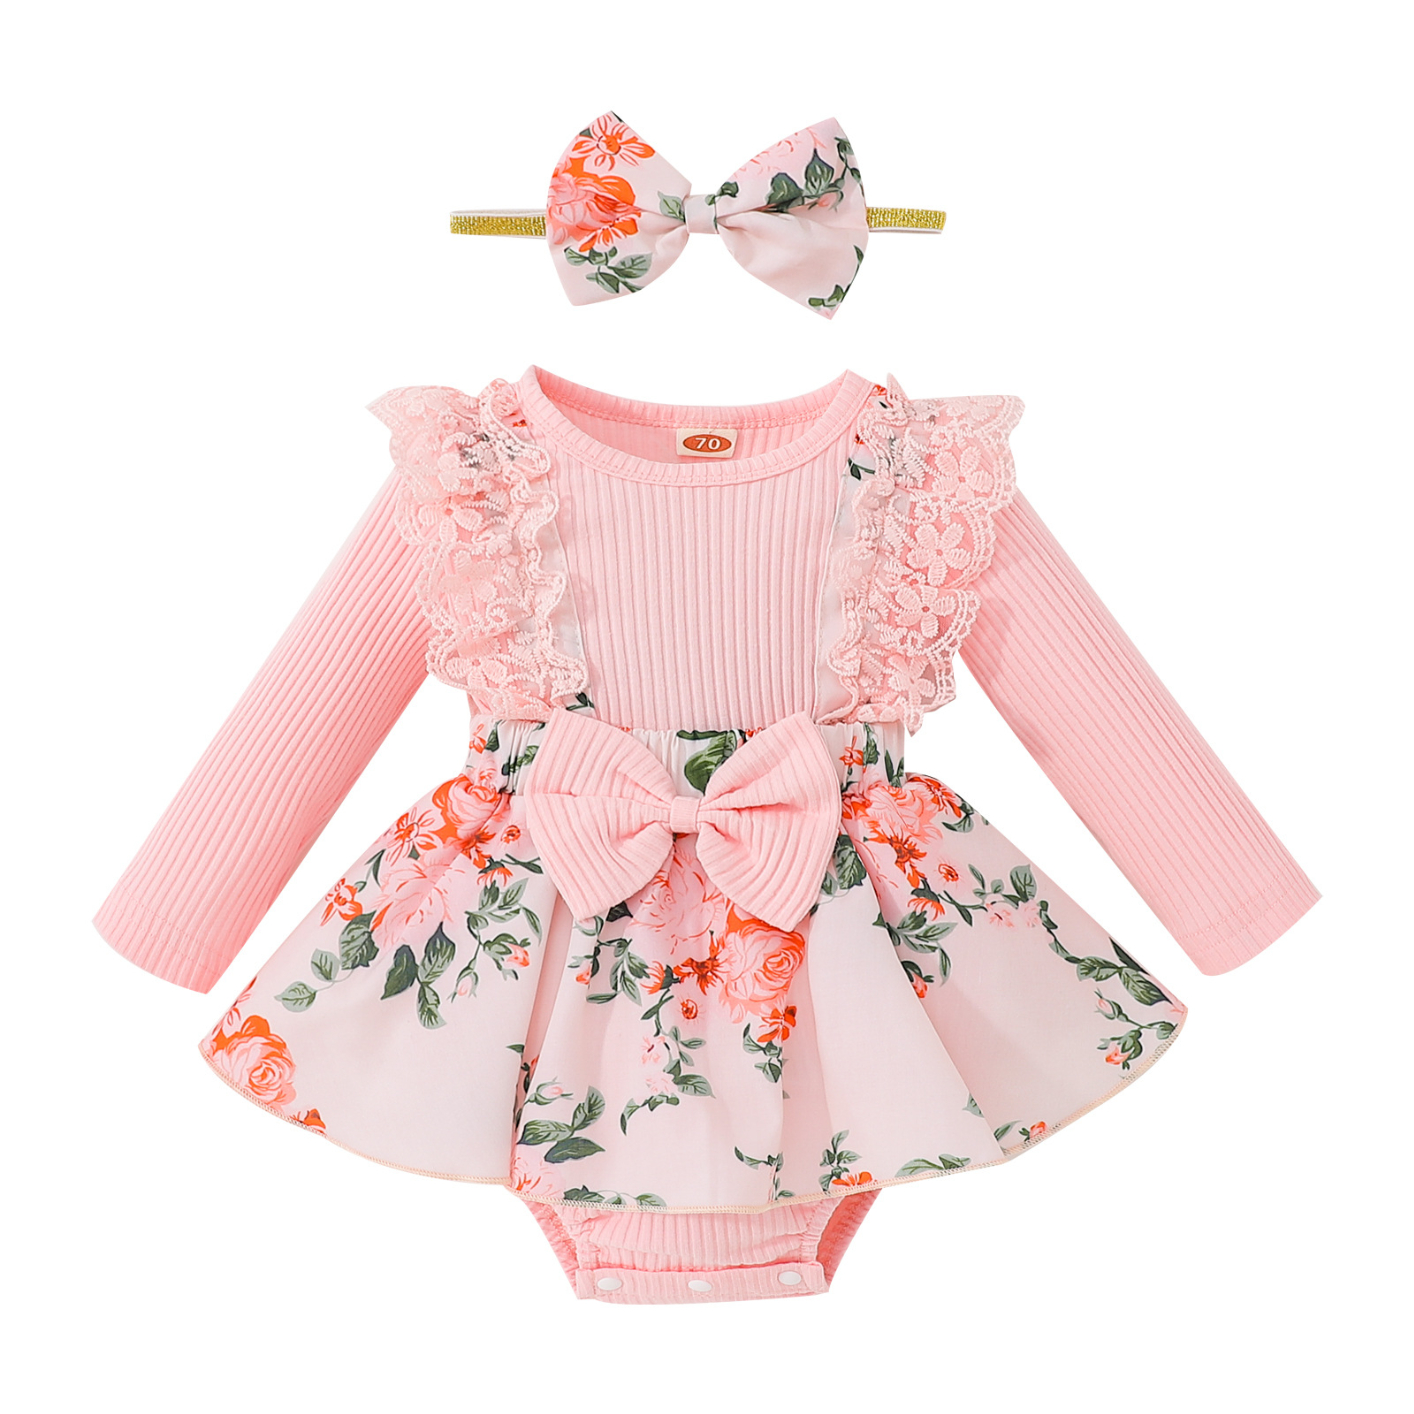 YJ2022S08 newborn baby girl clothing baby jumpsuit floral slip dress ruffled sleeve jumpsuit jumpsuit headband 